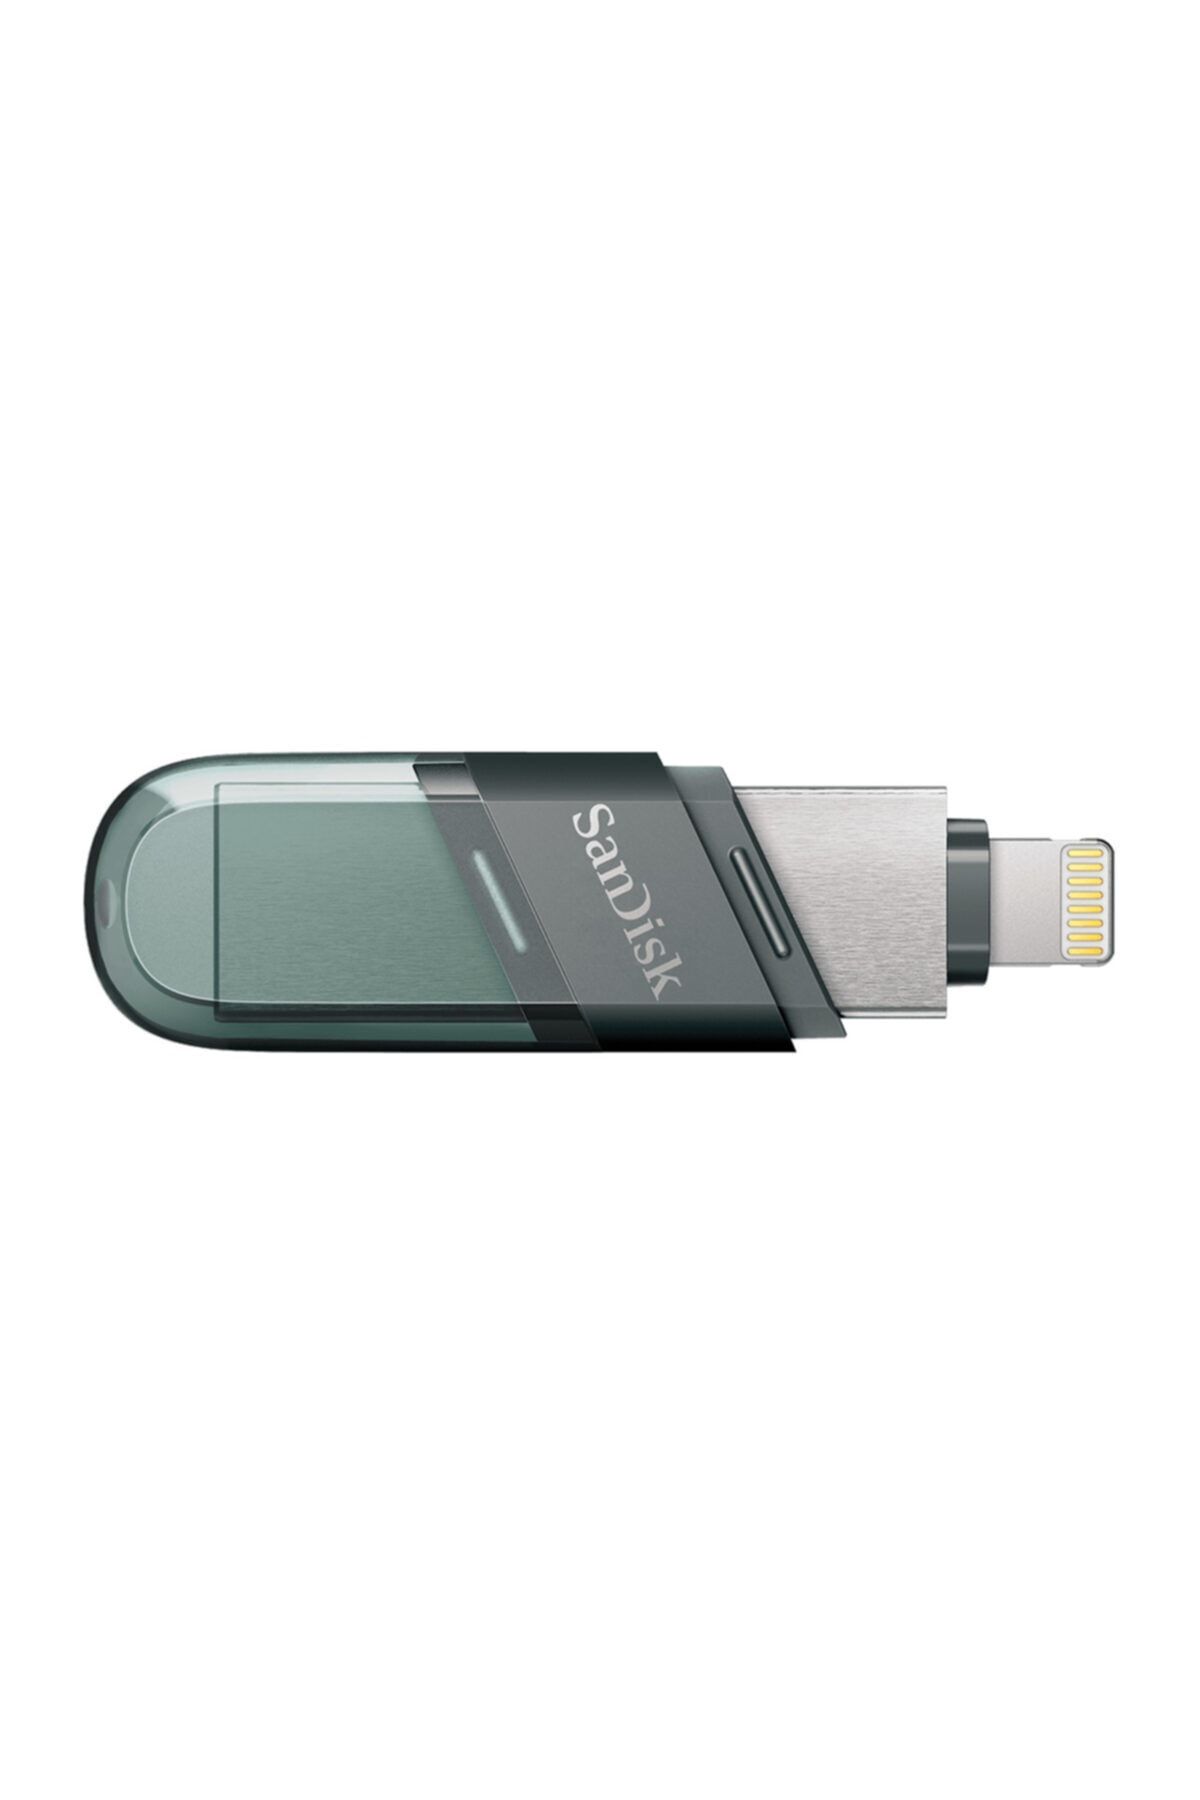 Sandisk iXpand 256GB Flash Drive Flip IOS USB 3.0